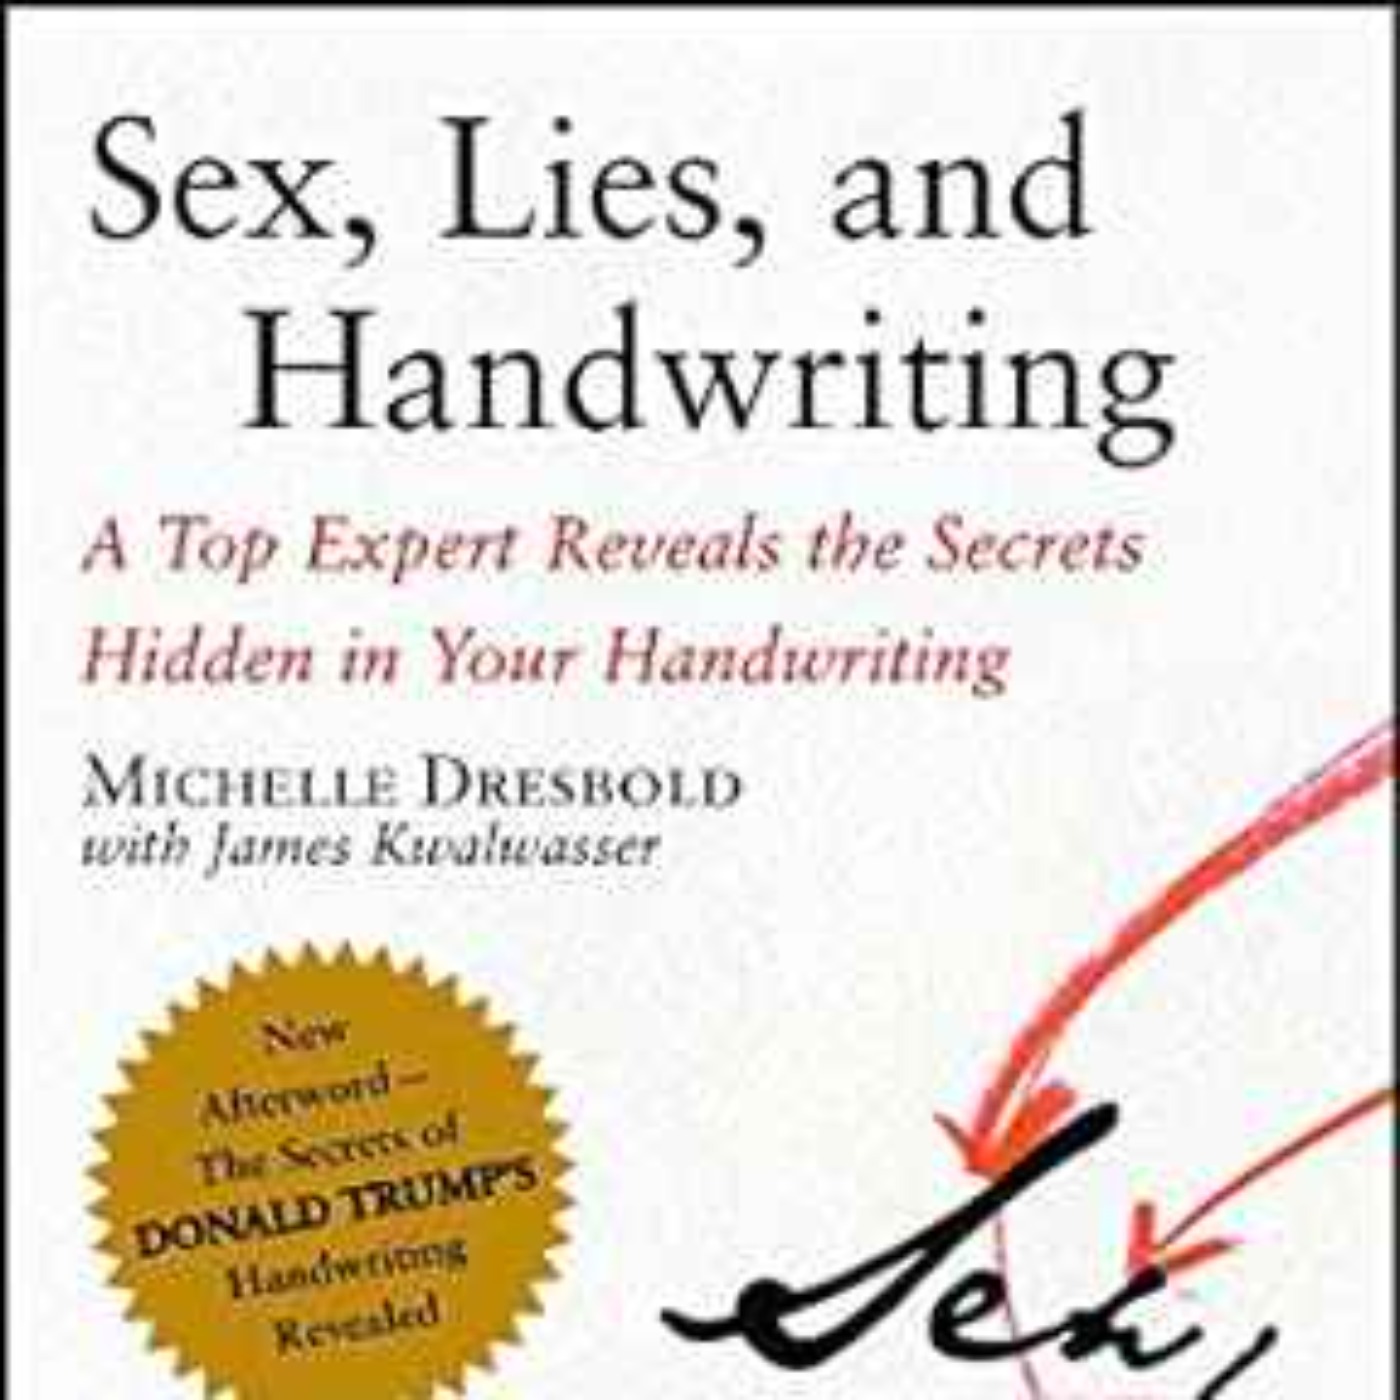 Michelle Dresbold - Sex, Lies, and Handwriting